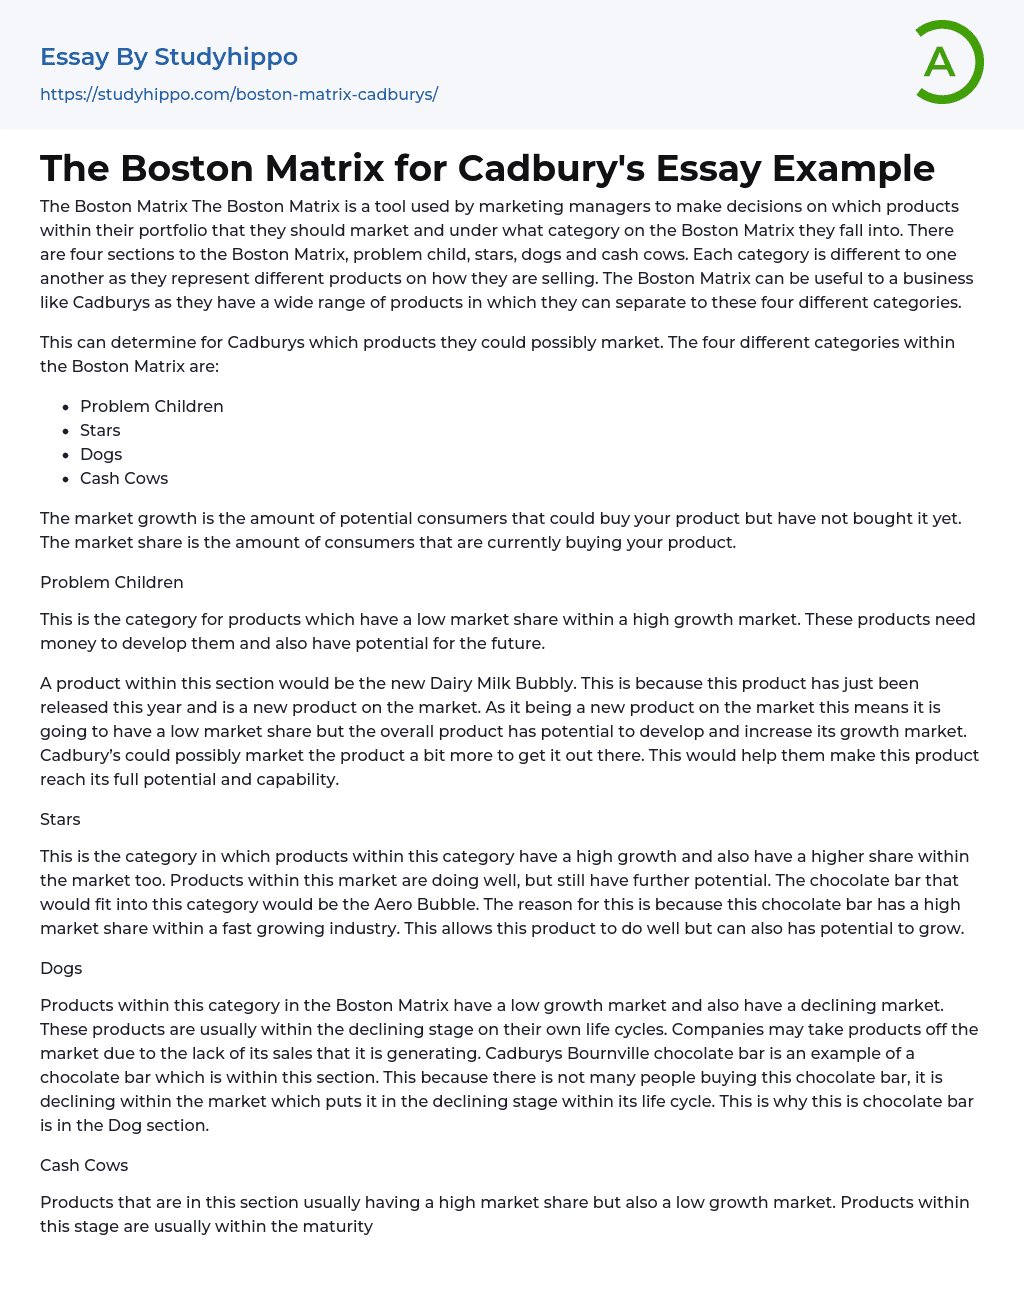 The Boston Matrix for Cadbury’s Essay Example